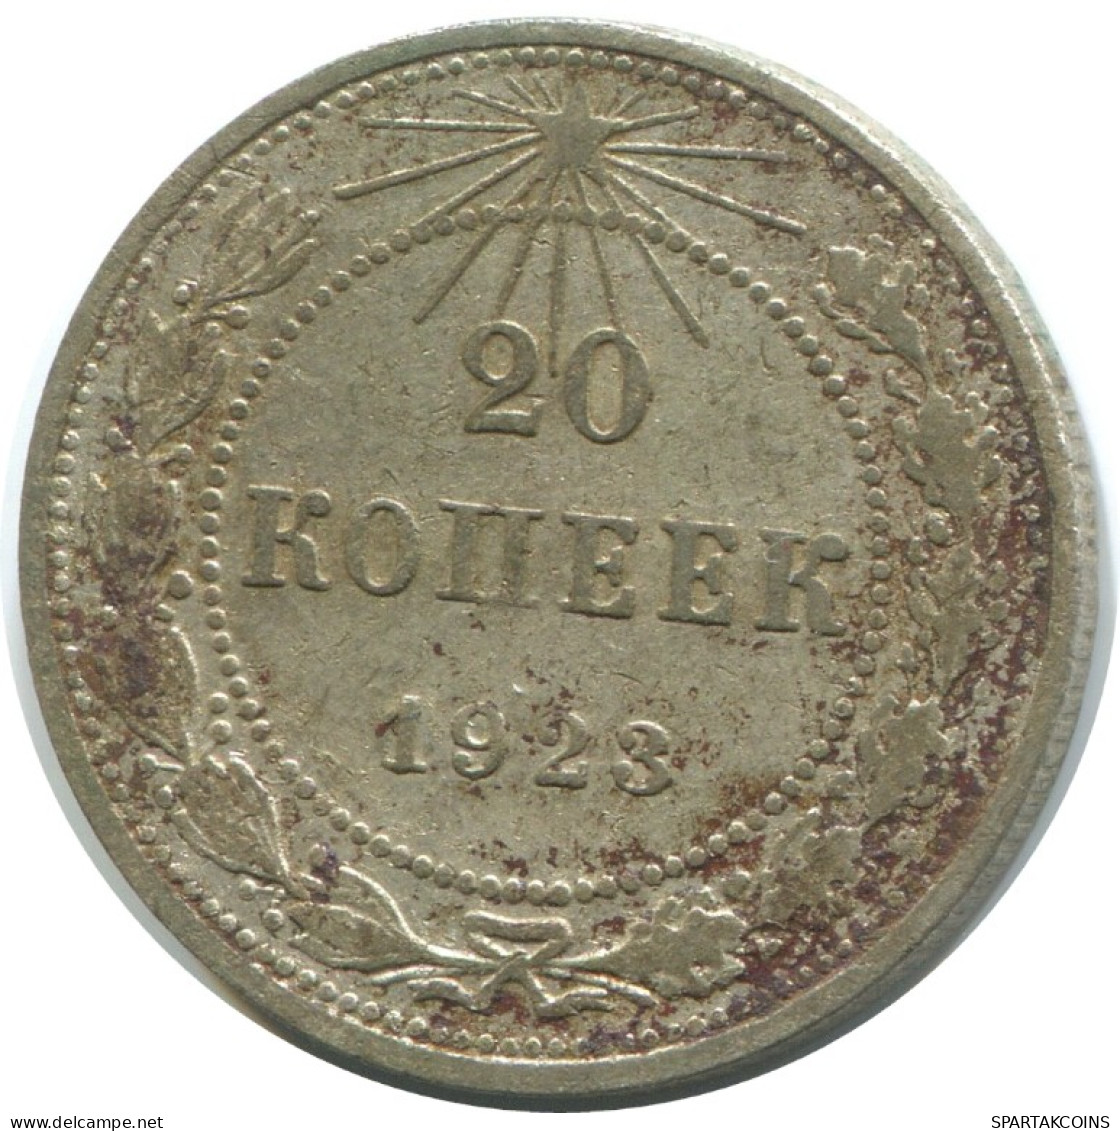 20 KOPEKS 1923 RUSSIA RSFSR SILVER Coin HIGH GRADE #AF526.4.U.A - Rusia